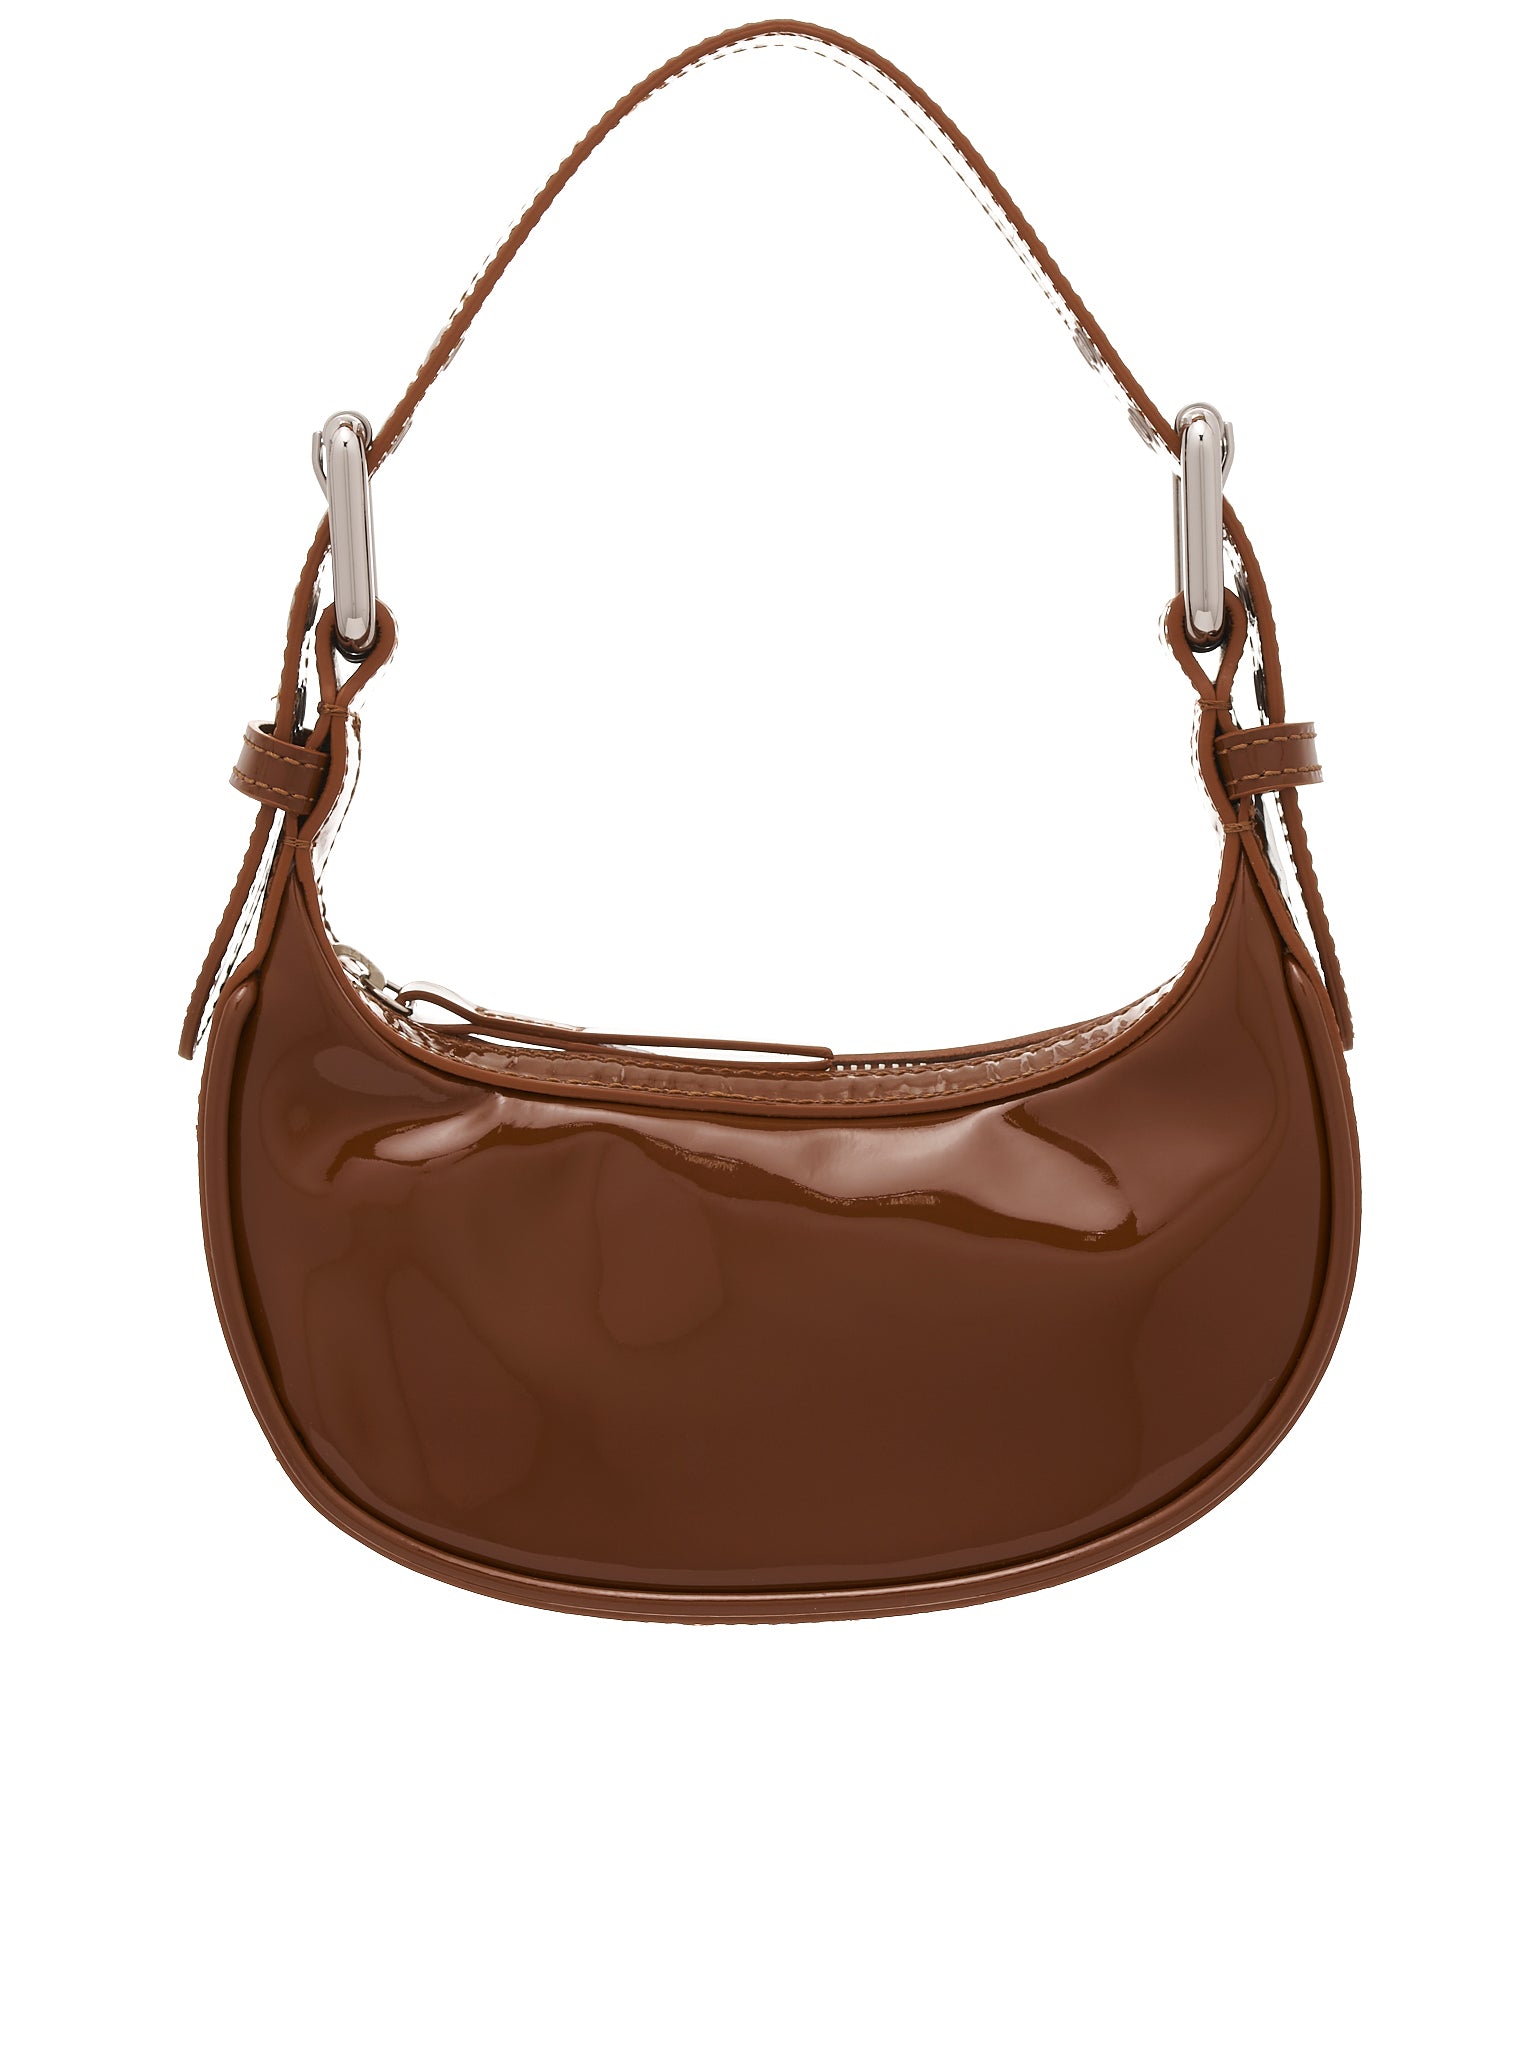 by Far | H.Lorenzo|Mini Soho Patent Leather Bag (MINI-SOHO-CHOCOLATE)